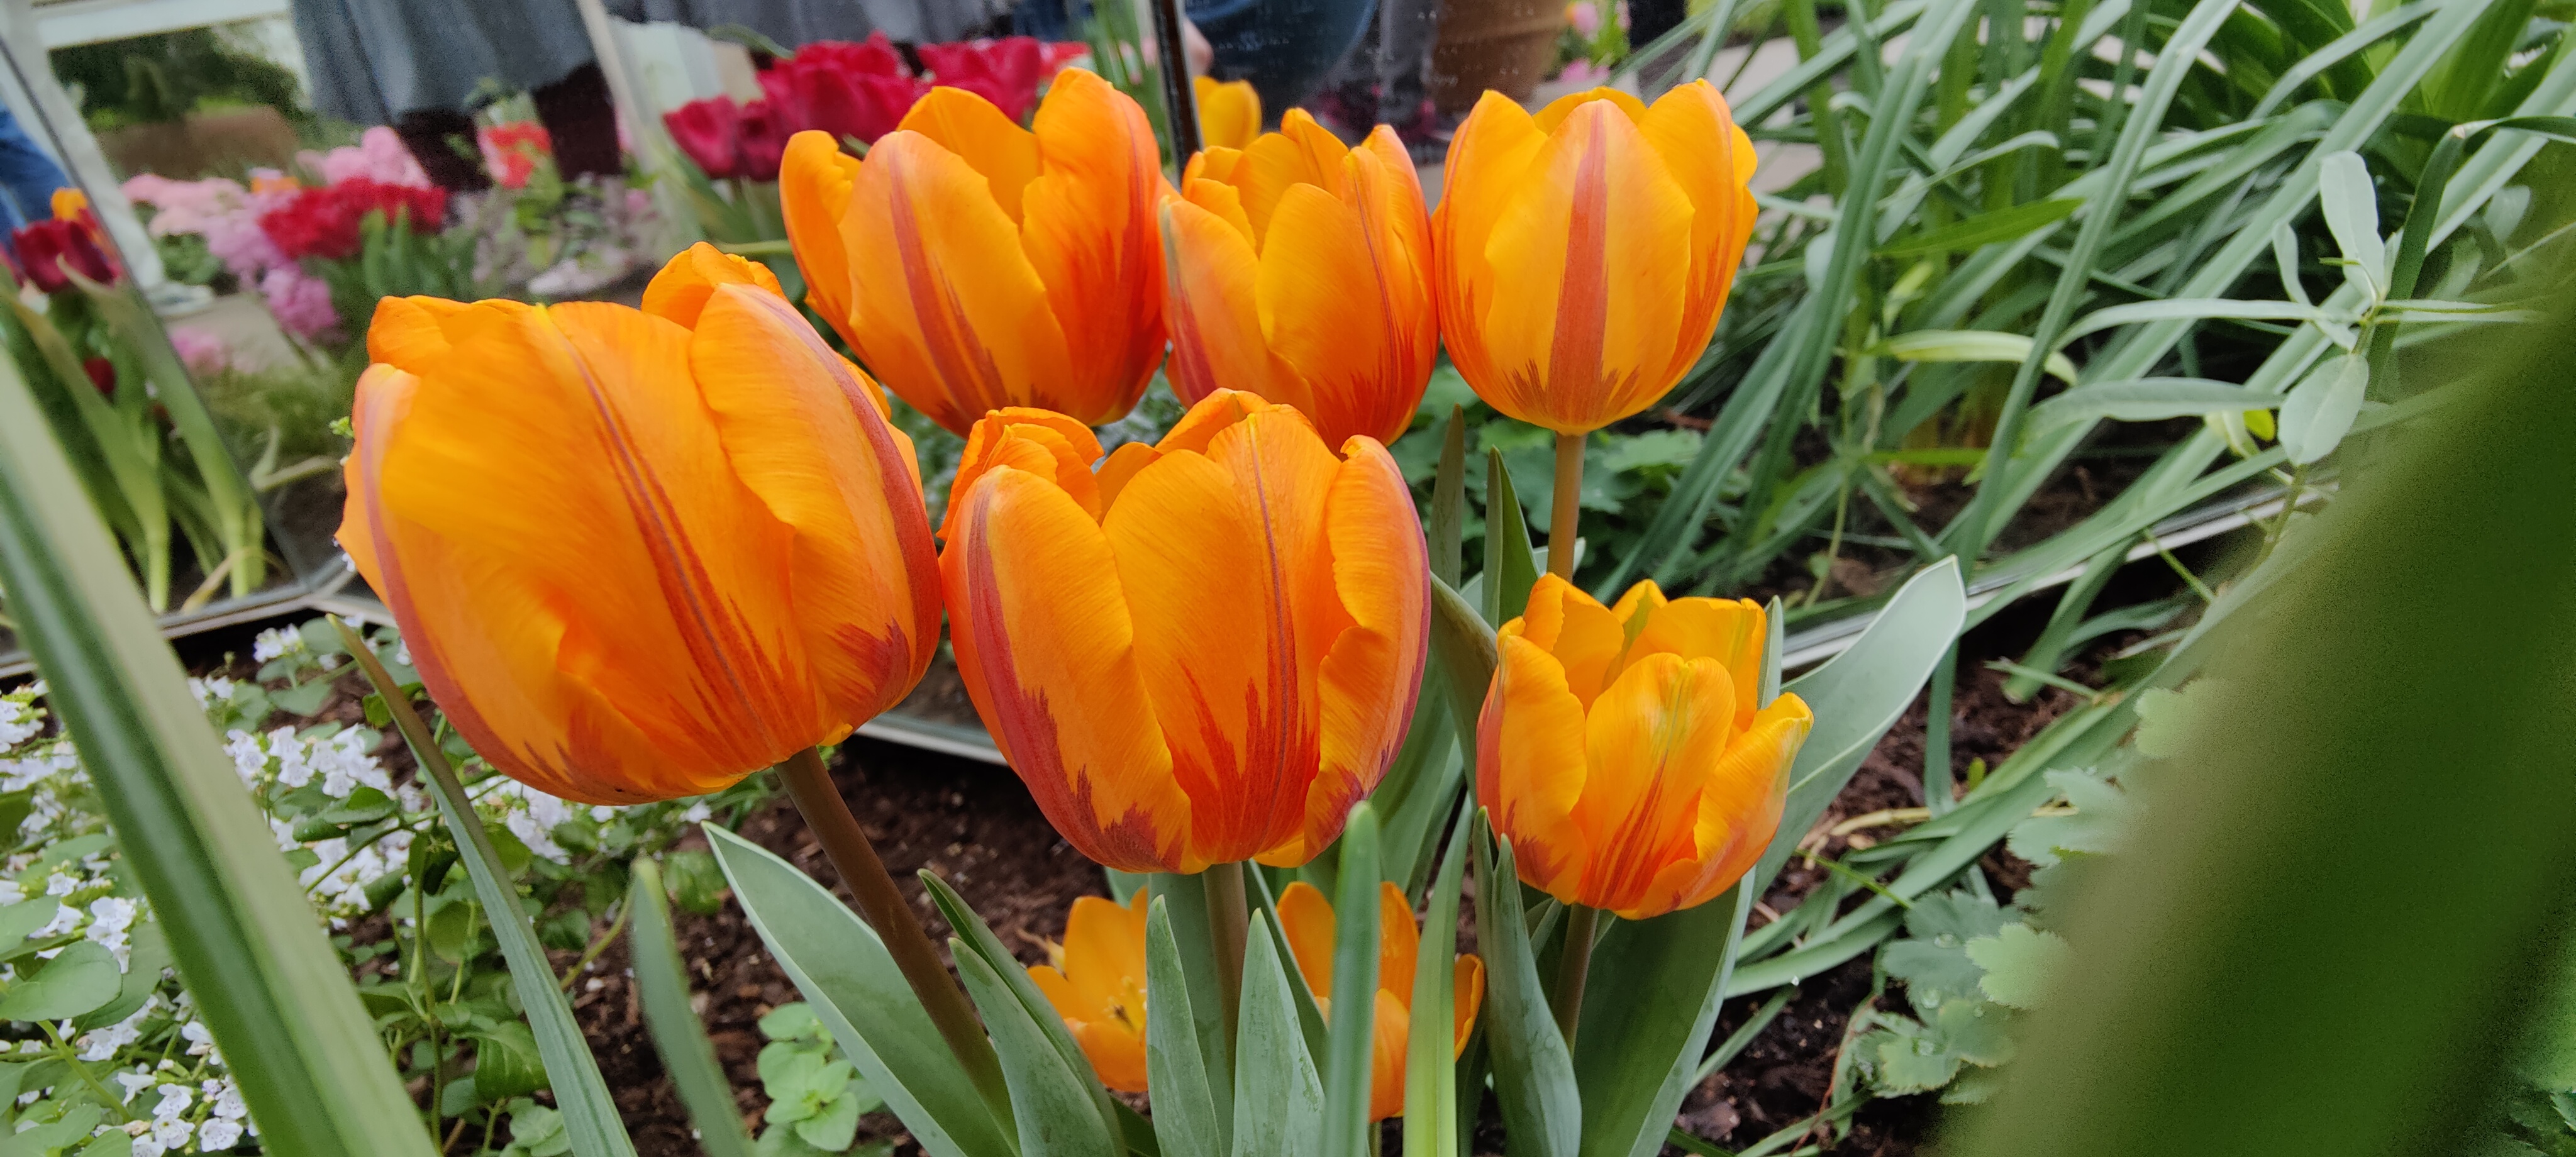 These tulips are SO ORANGE.